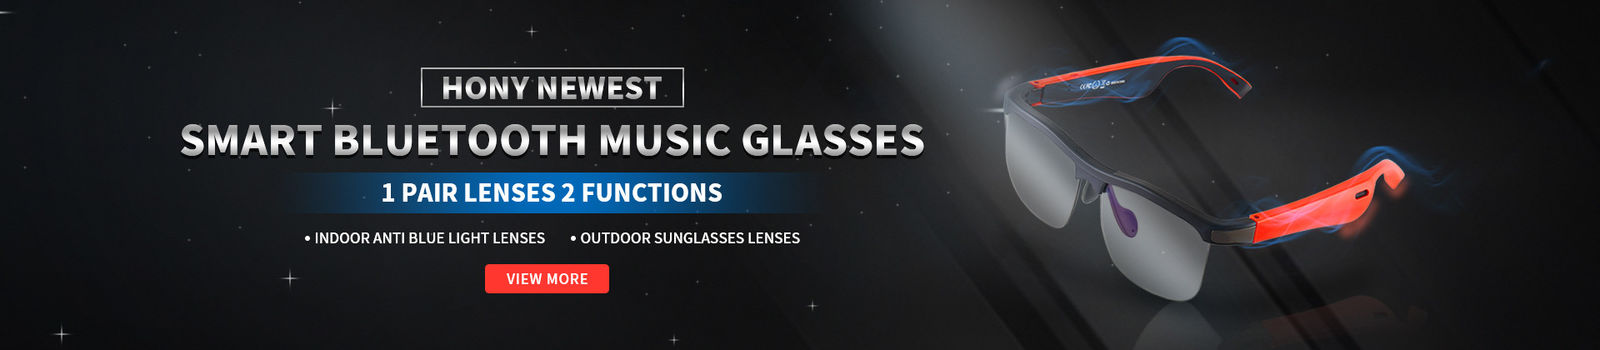 kacamata hitam audio bluetooth